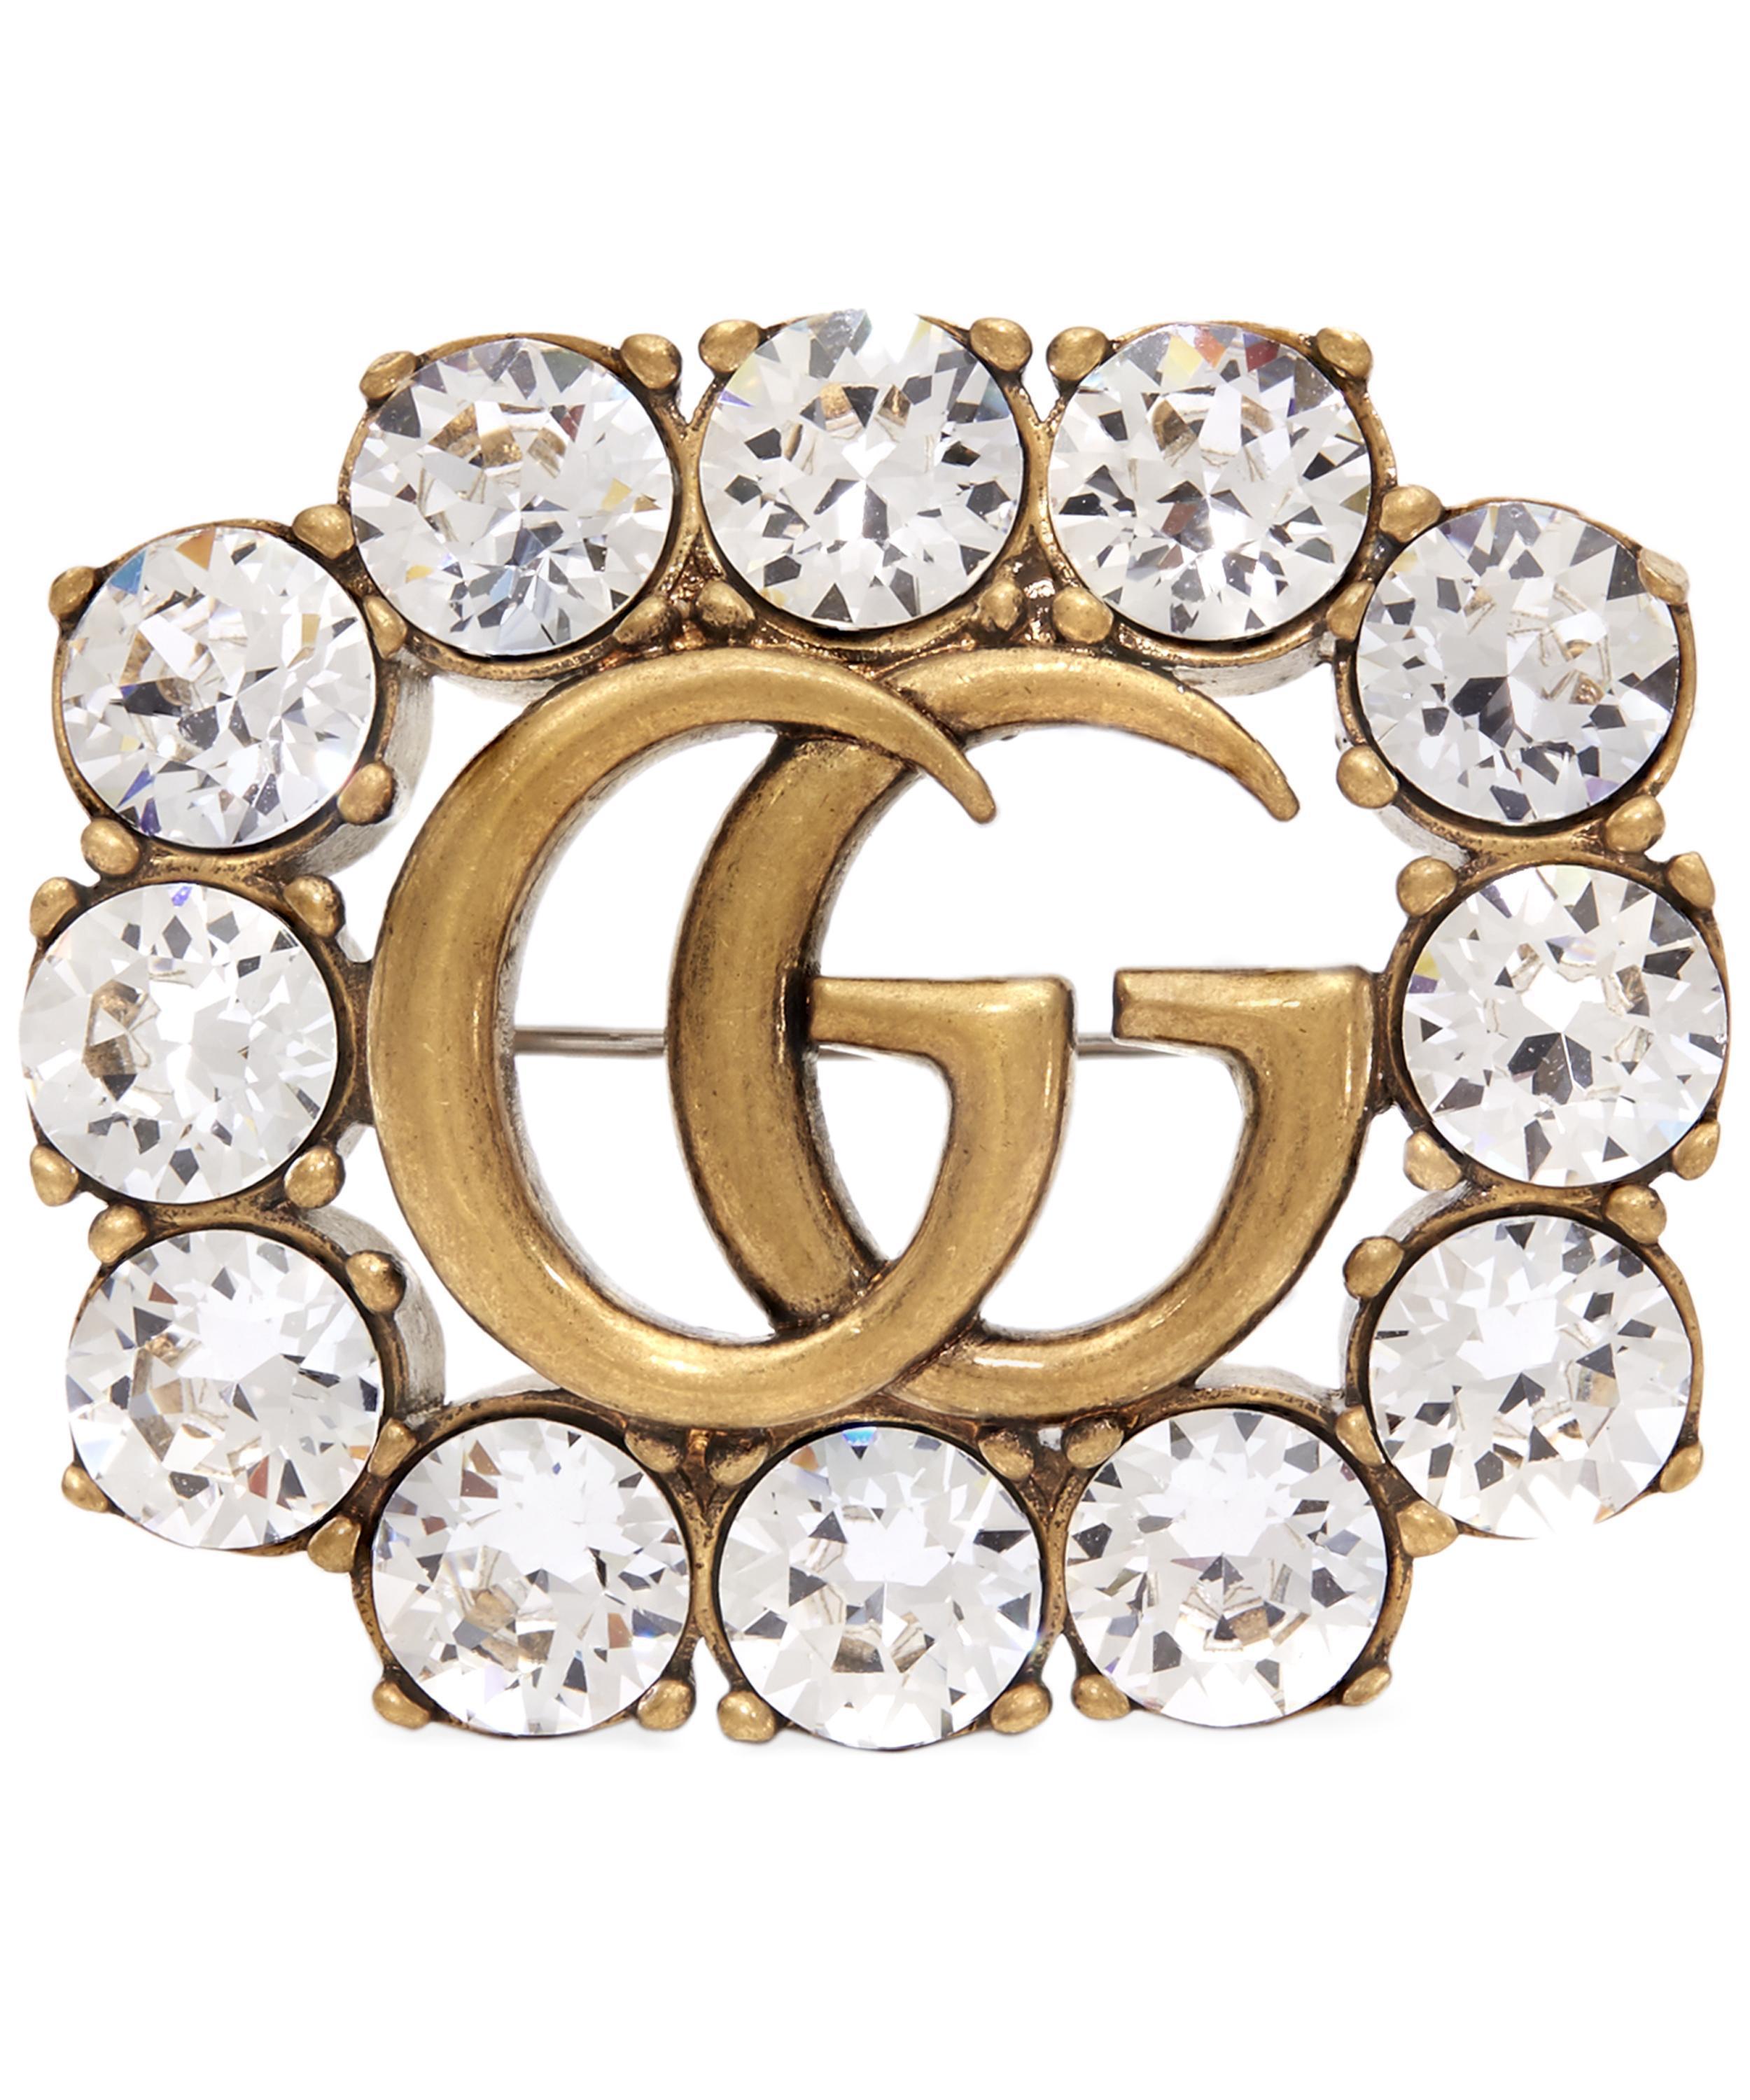 Clear Gucci Logo - Gucci Double G Logo Crystal Brooch in Metallic - Lyst